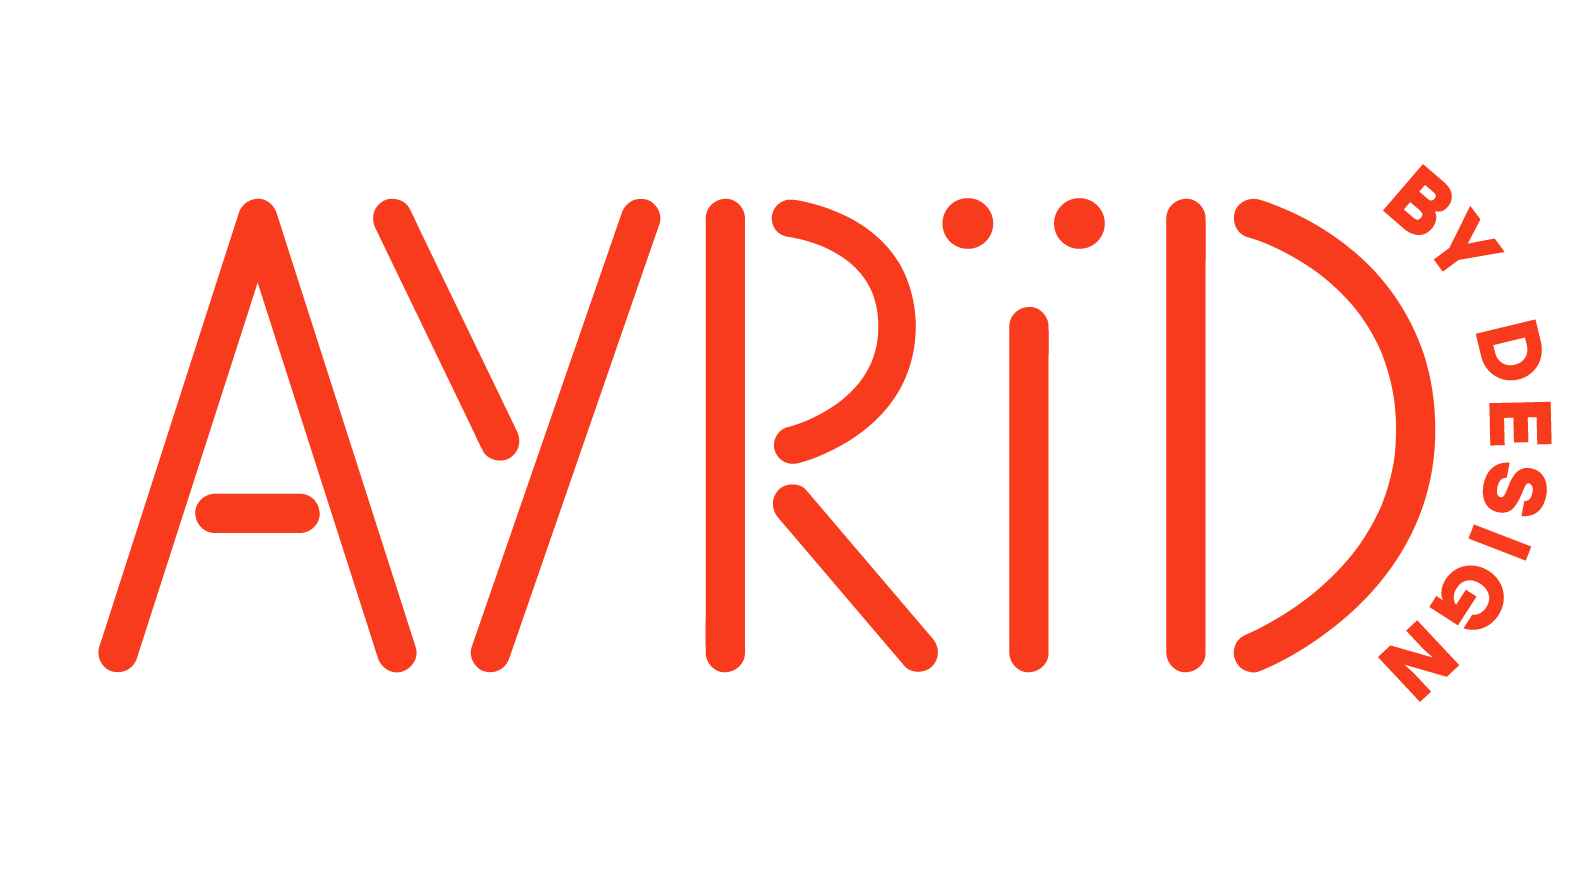 Ayrïd by Design